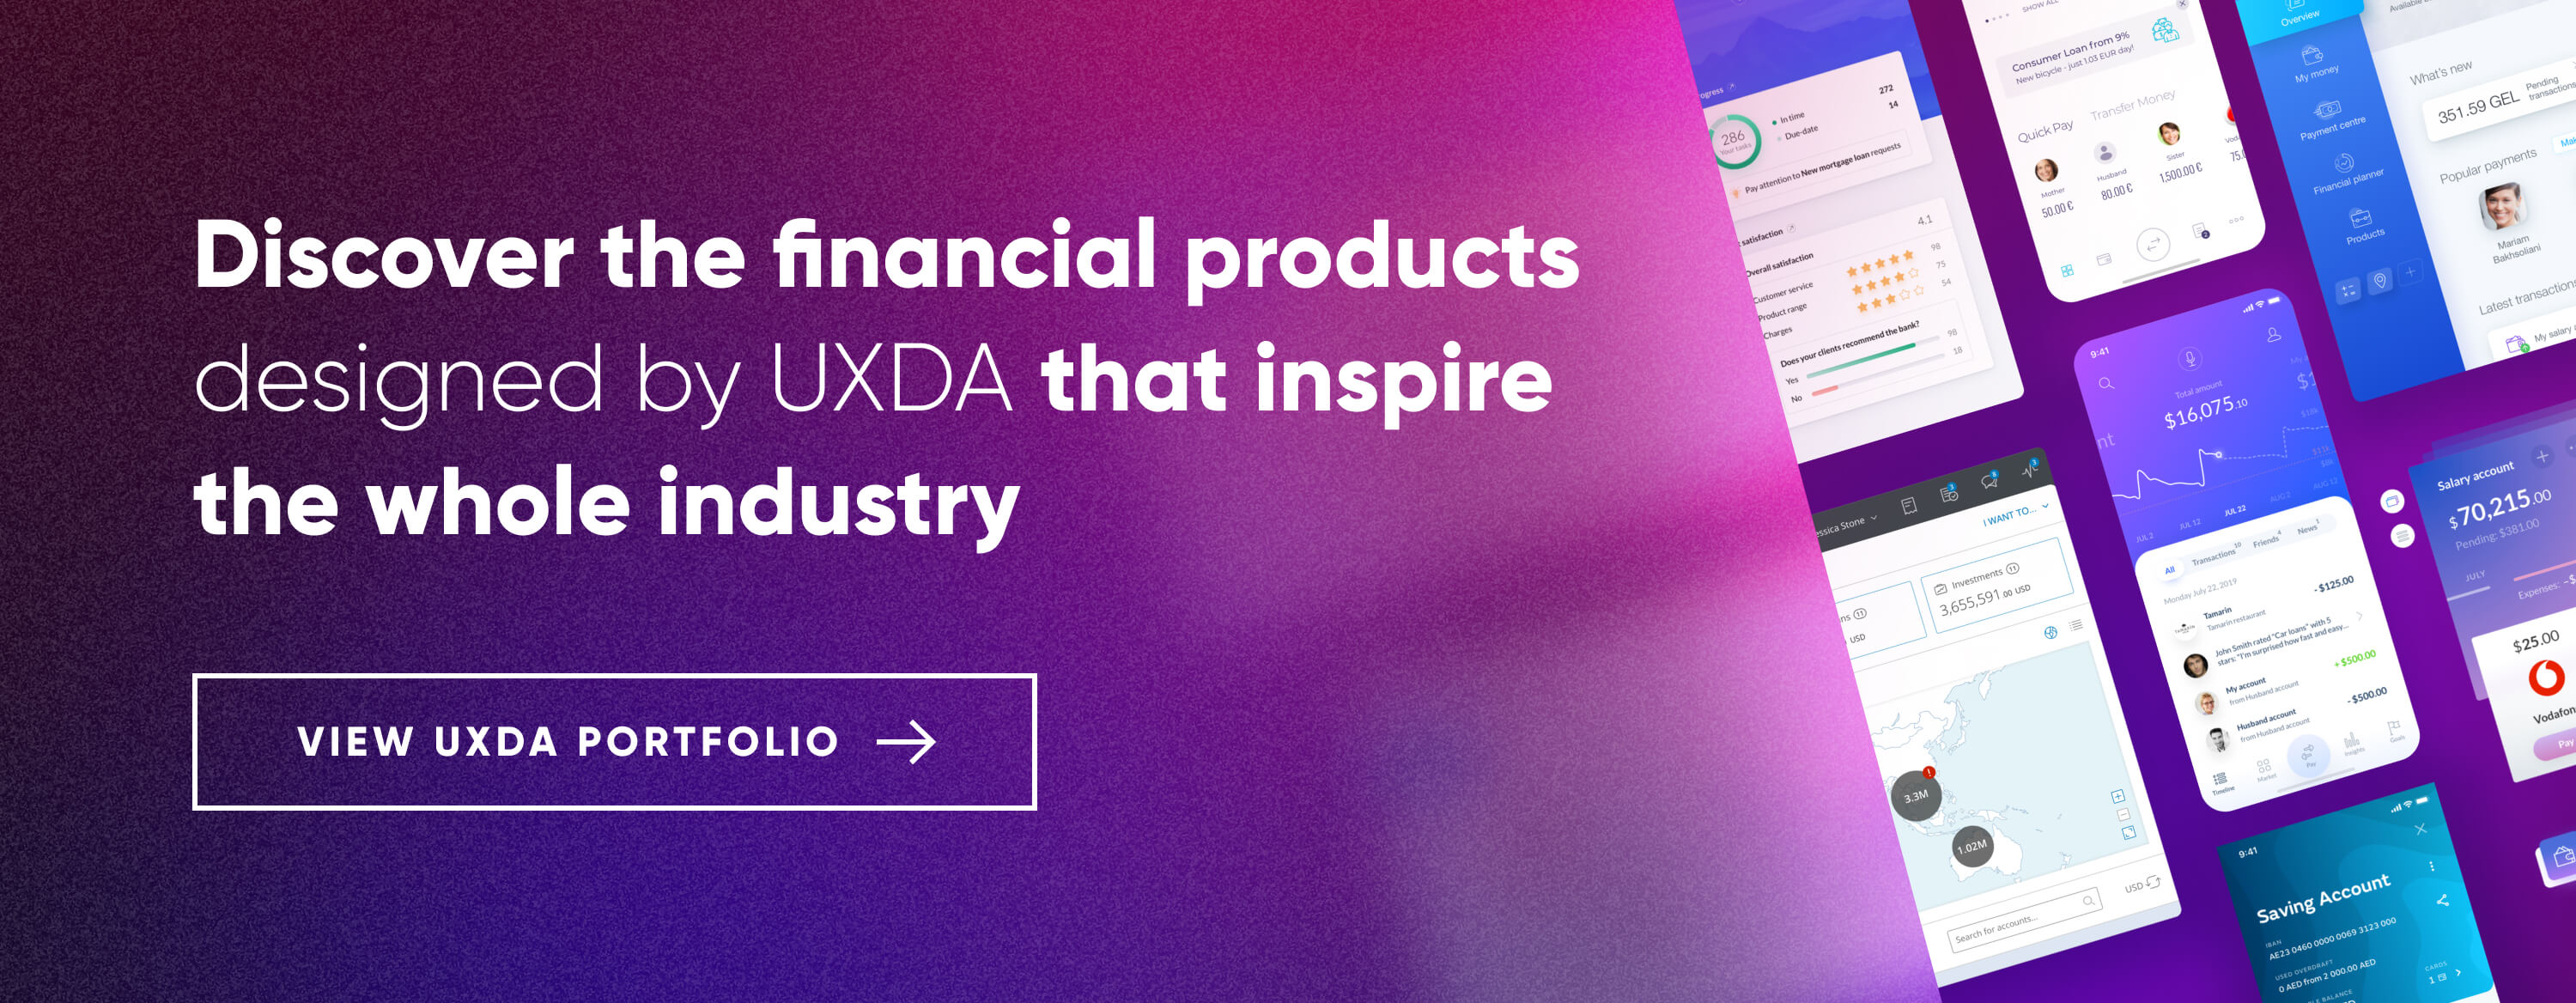 uxda-portfolio-financial-digital-product-inspire-industry-ux-1669631376.jpg